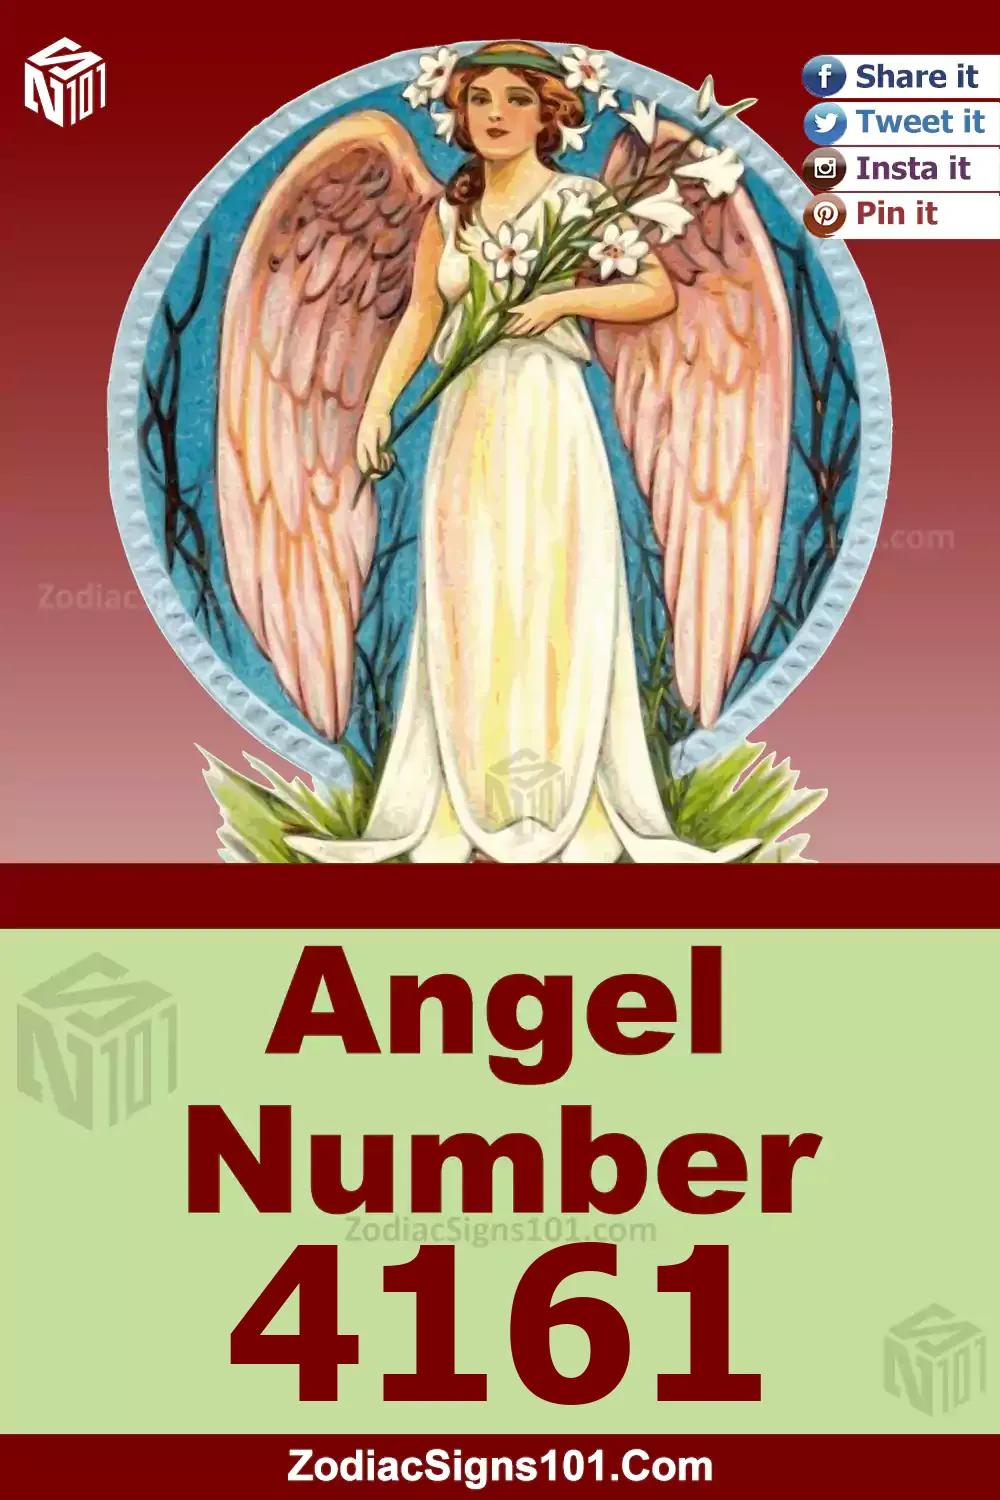 4161-Angel-Number-Meaning.jpg